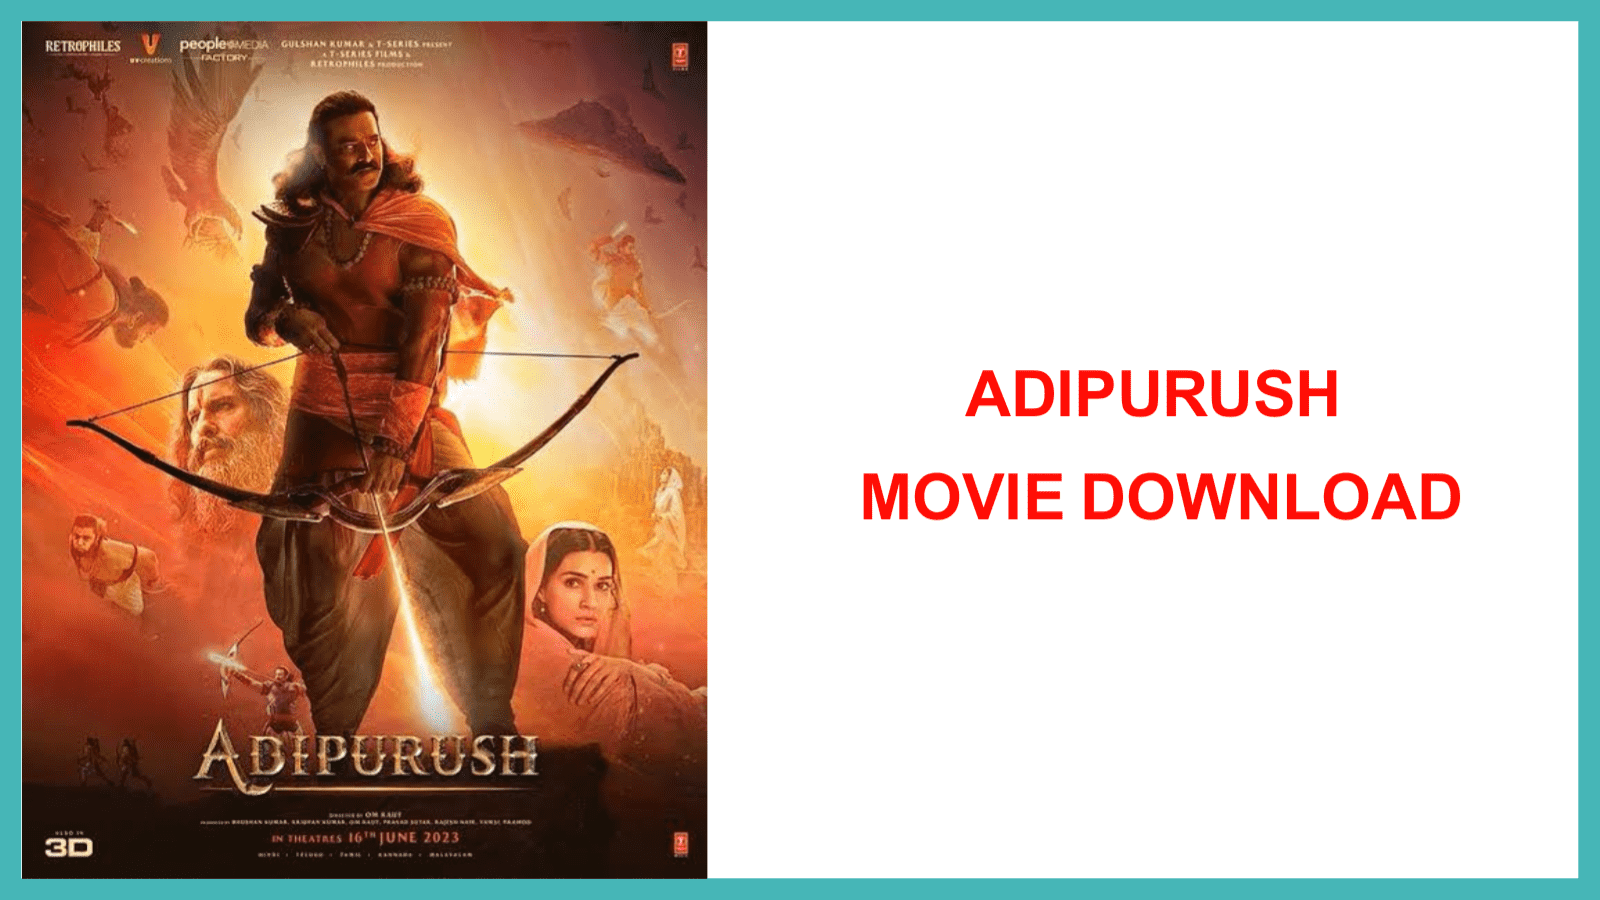 Adipurush Movie Download In Hindi Filmyzilla 480p, 720p, 1080p Direct Link